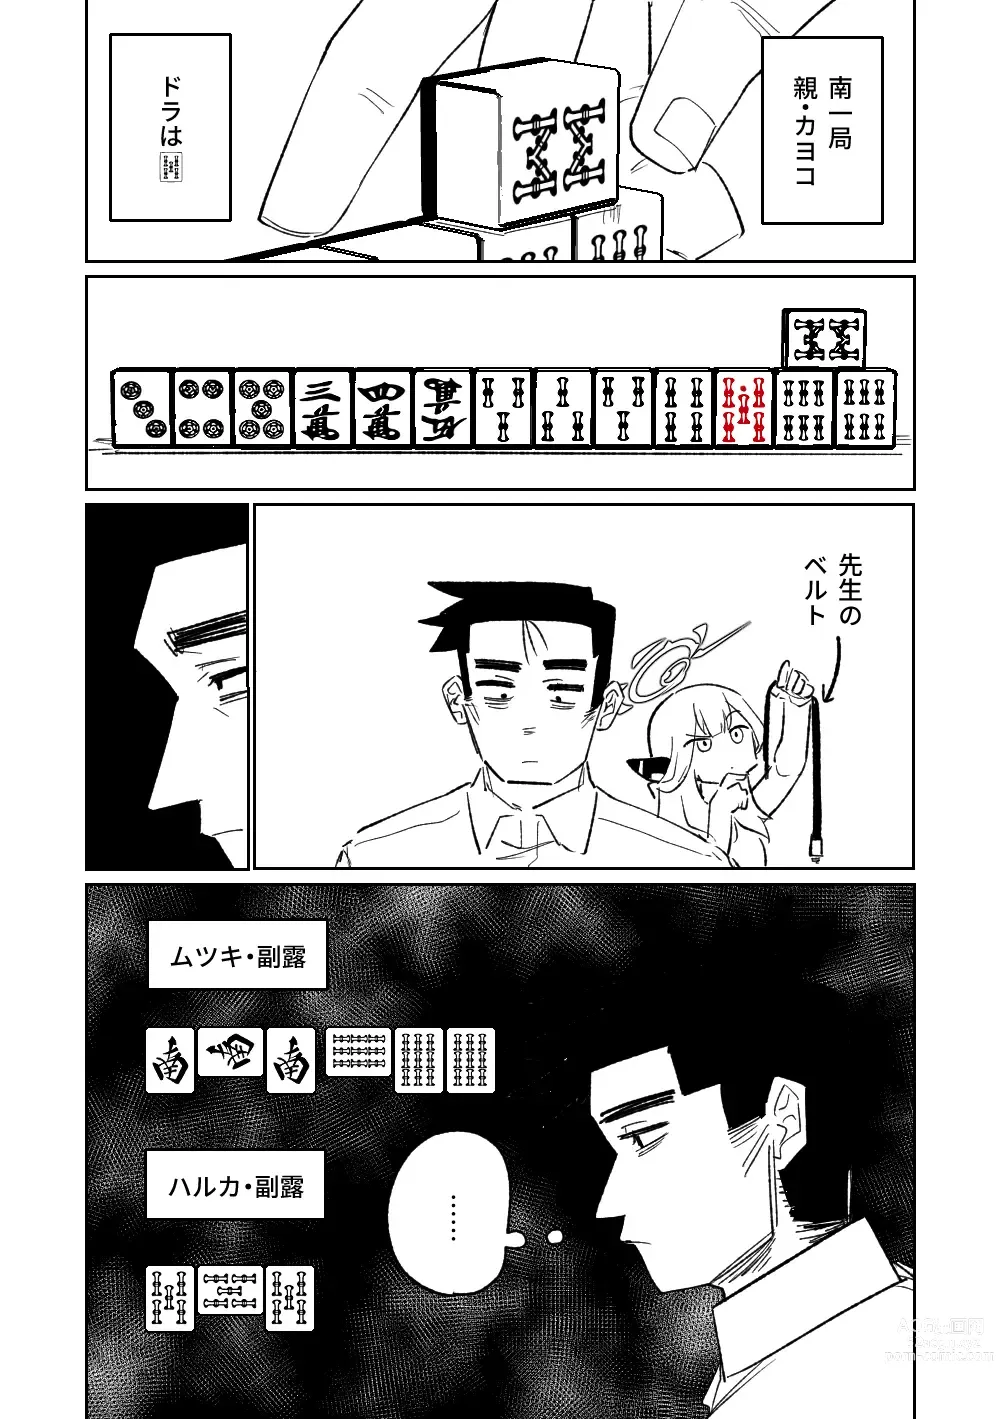 Page 14 of doujinshi Benriya 68 Datsui Mahjong Ichi ~Sankaisen~